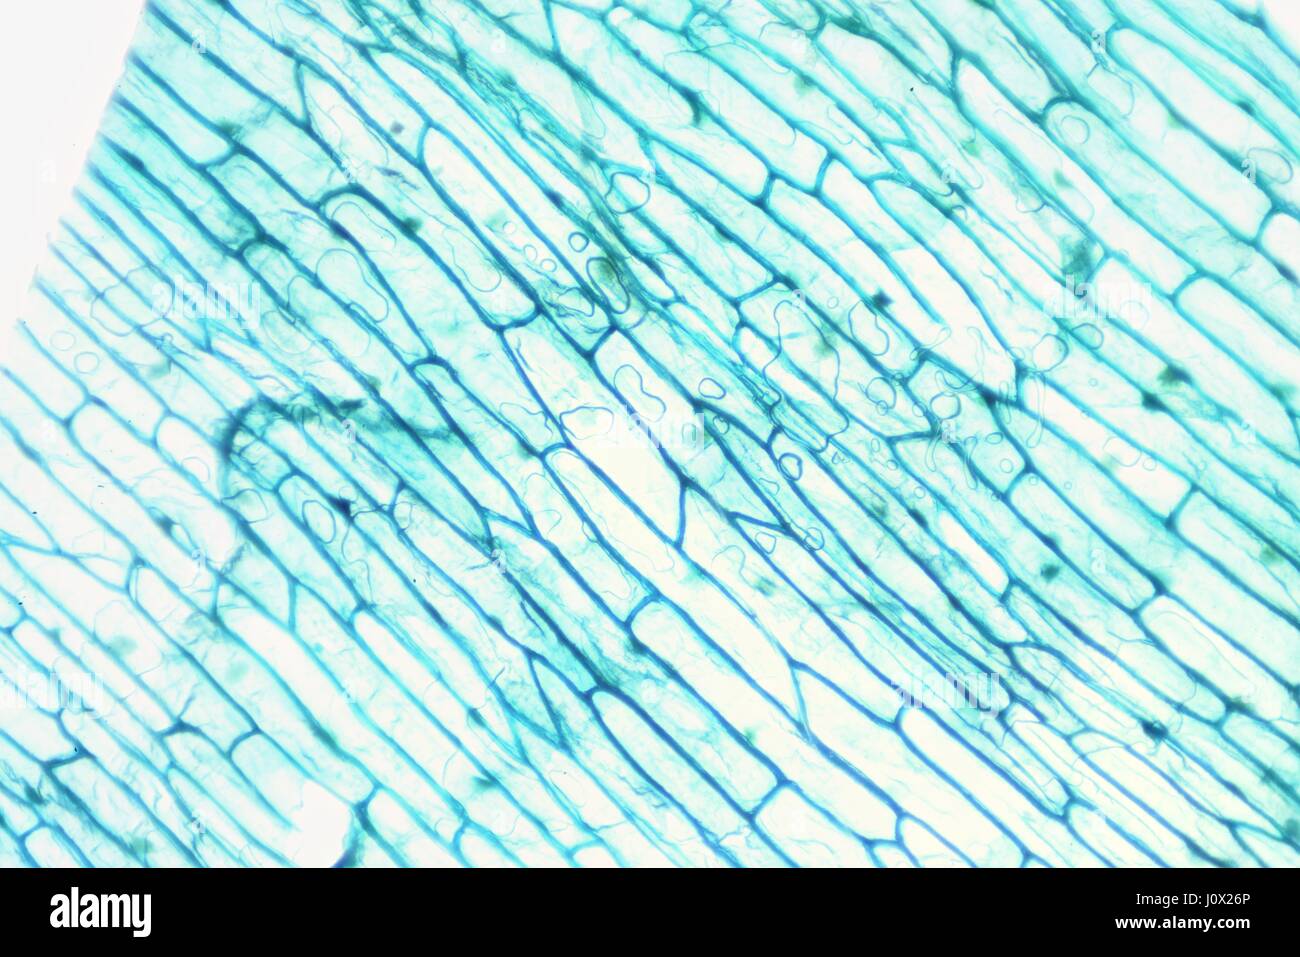 The Microscopic World. Onion epidermis with cells. Stock Photo